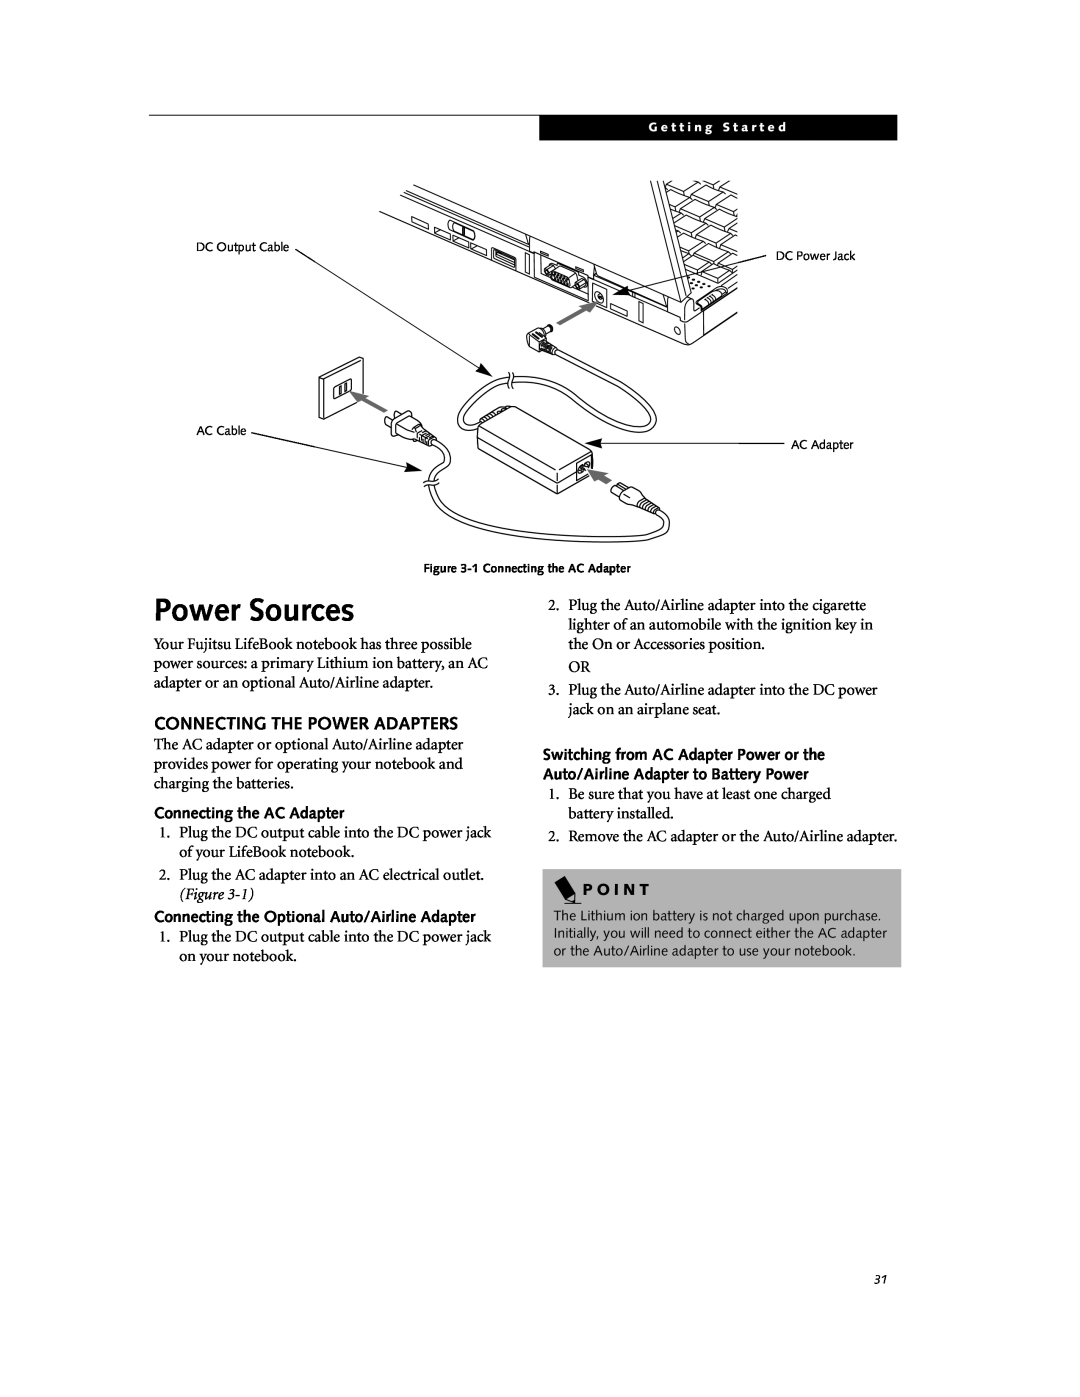 Fujitsu DVD Player manual Power Sources, Connecting The Power Adapters, Connecting the AC Adapter, P O I N T 